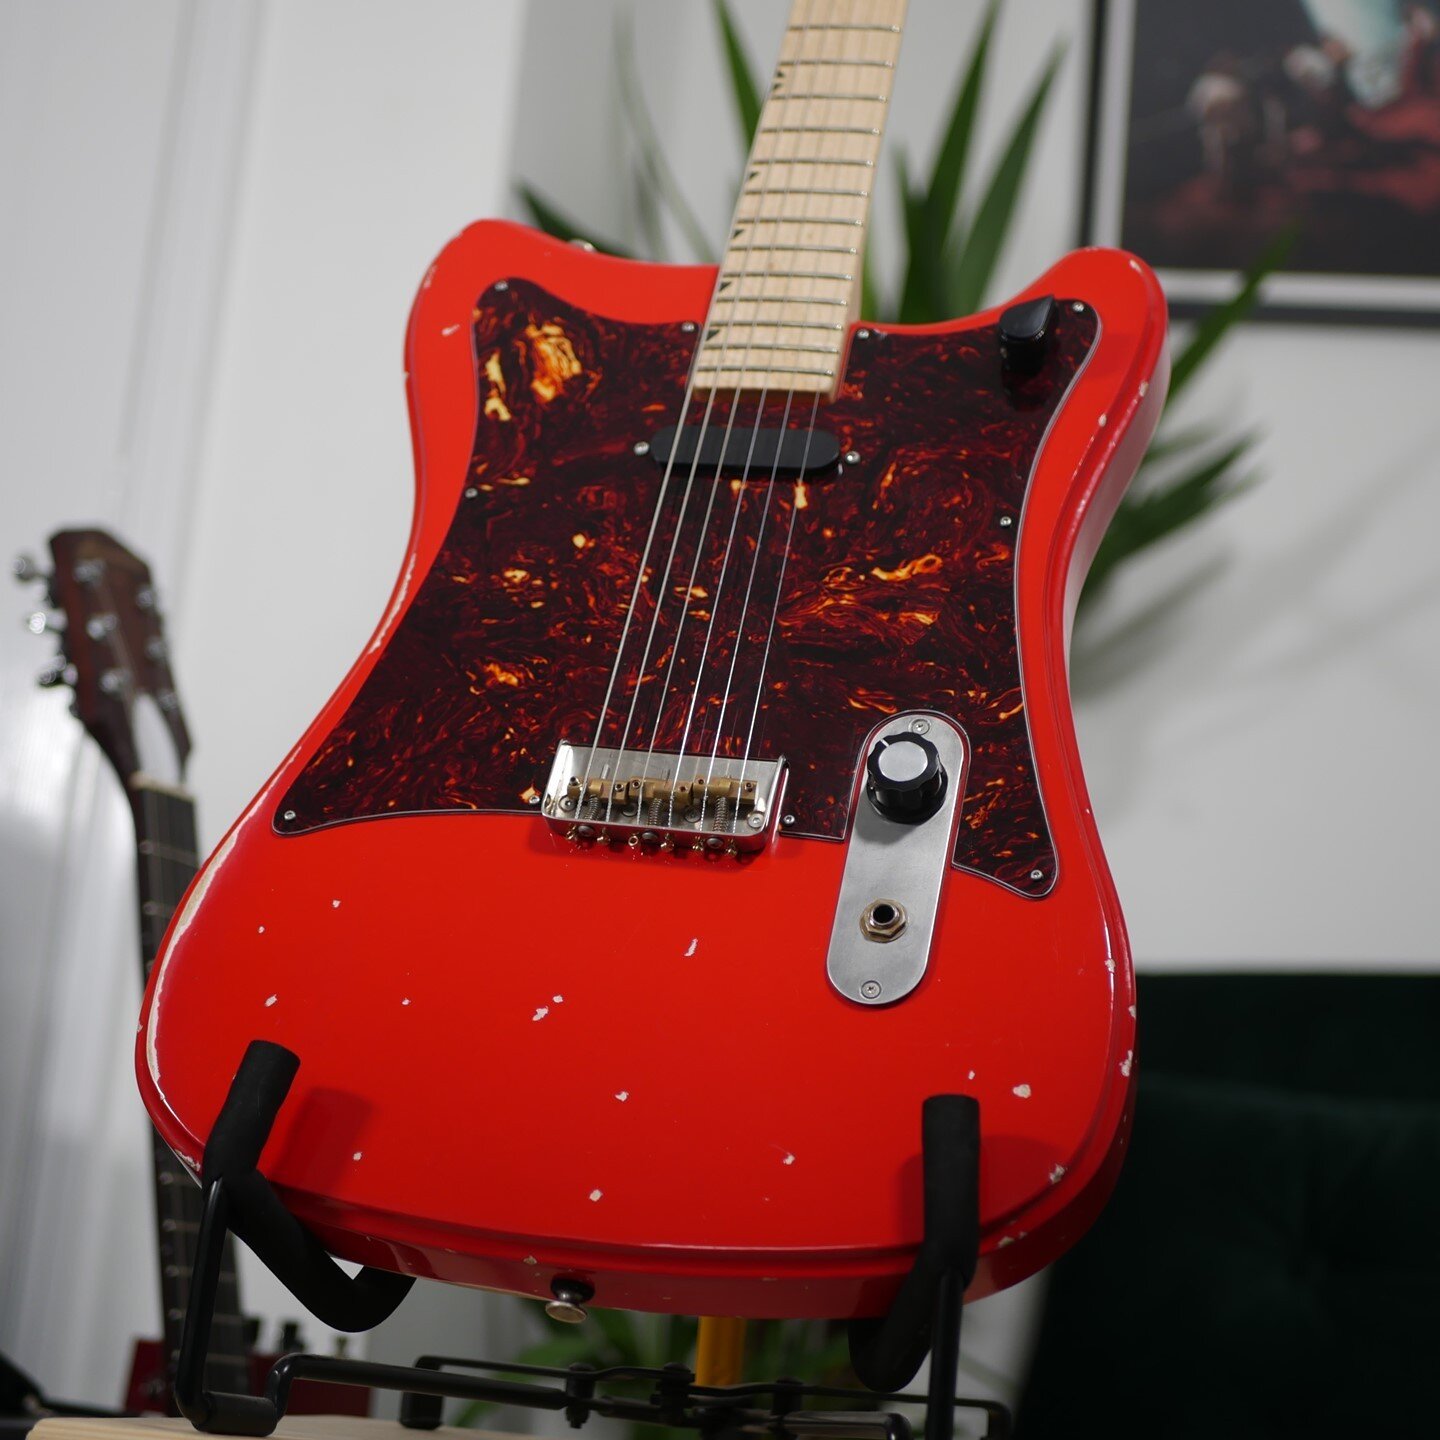 Where would you position the single pickup in your @fidelityguitars LITE model?⁠
____________________________________________⁠
#guitarist #guitarlove #fender #gibson #guitarsofinstagram  #guitarporn #rocknroll #instamusic #guitarplayer #geartalk #kno